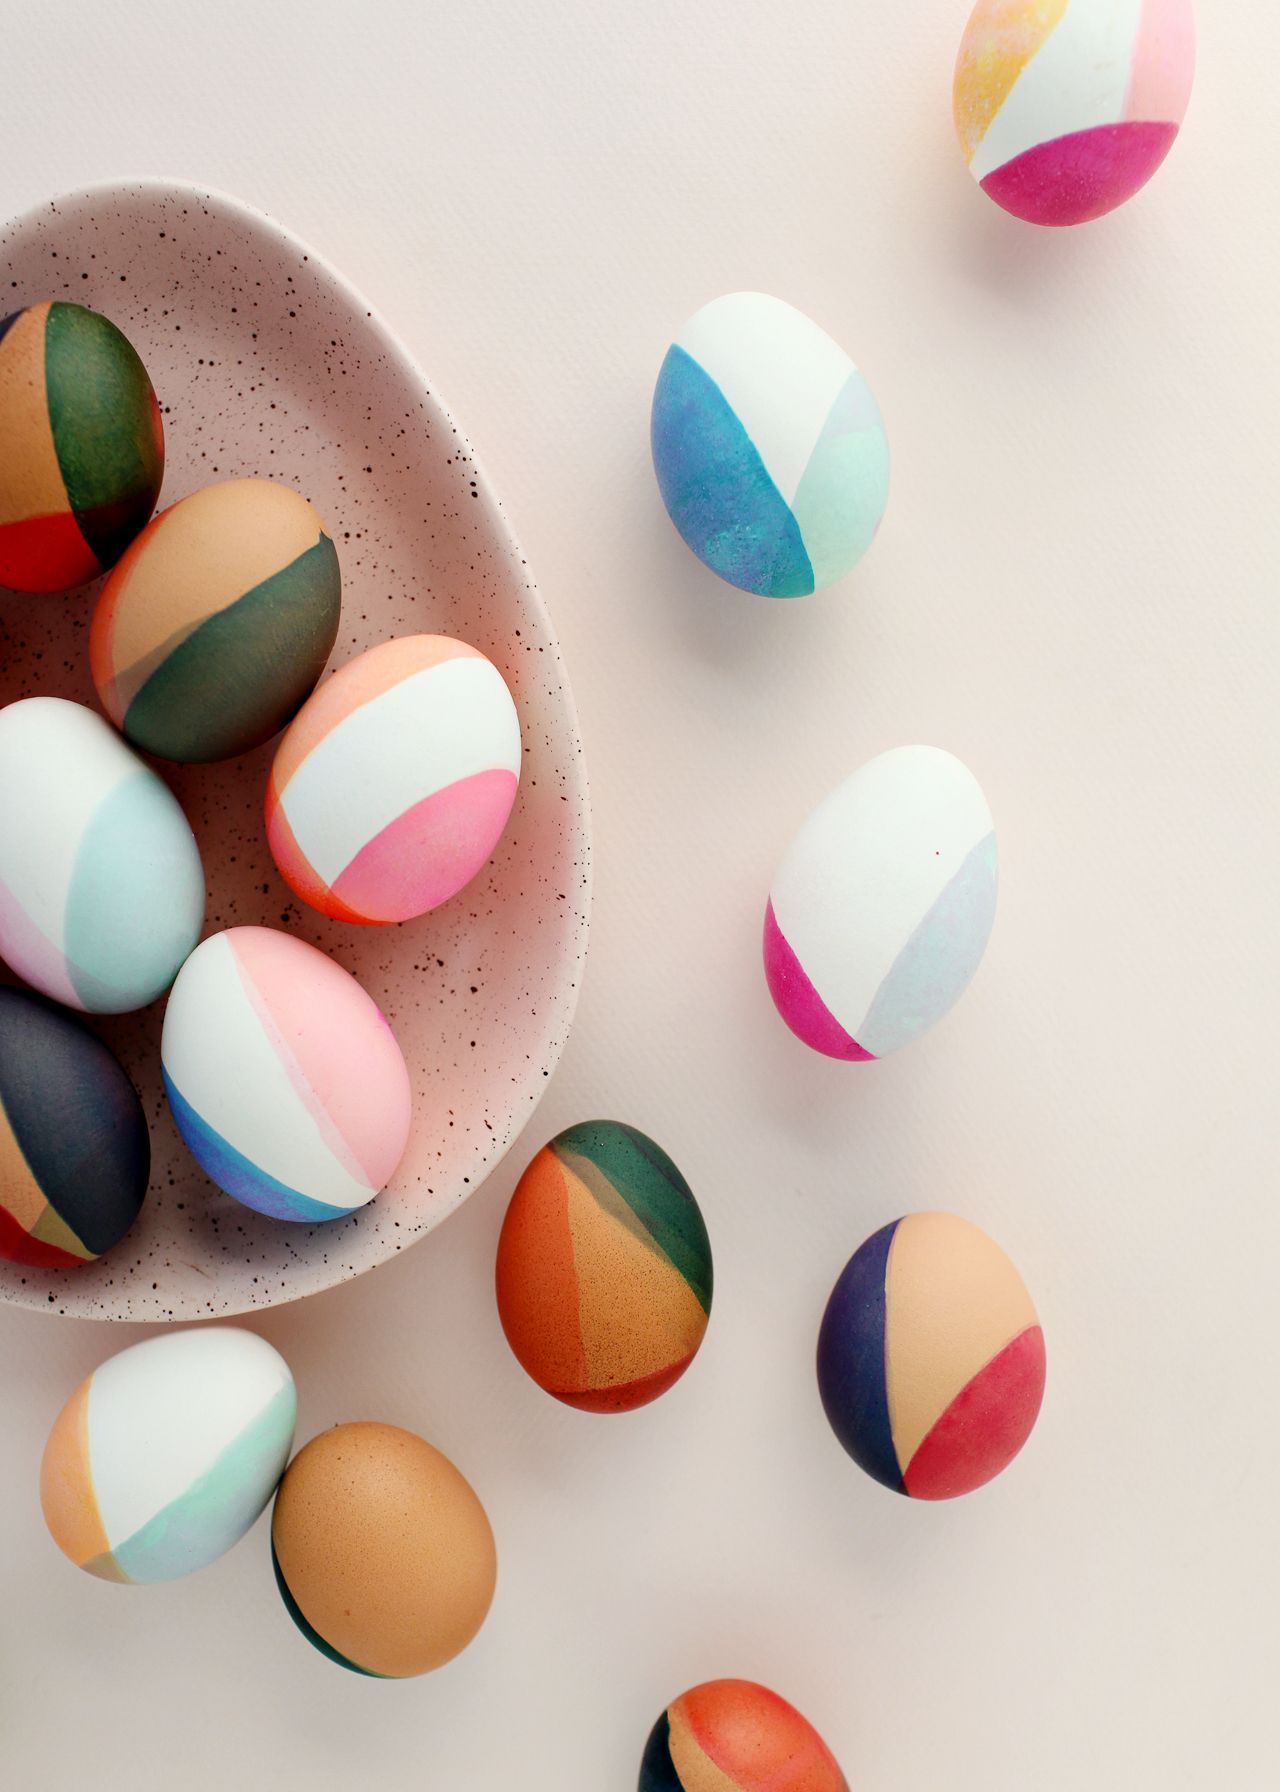 colorful single easter eggs